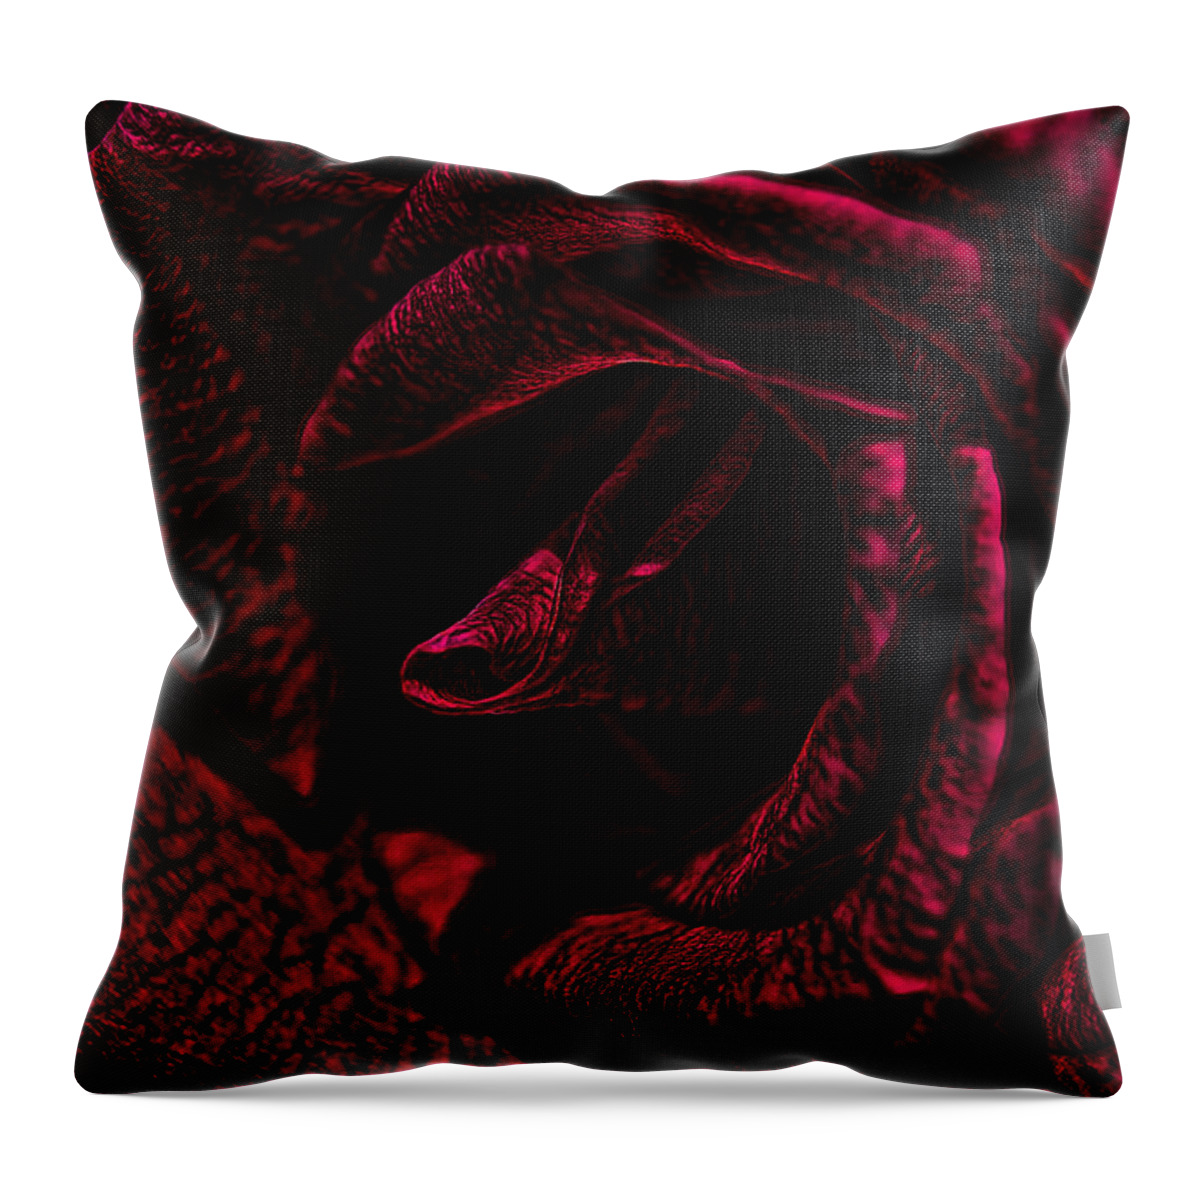 Digital Art Throw Pillow featuring the photograph Wild Rose by Kathy Churchman